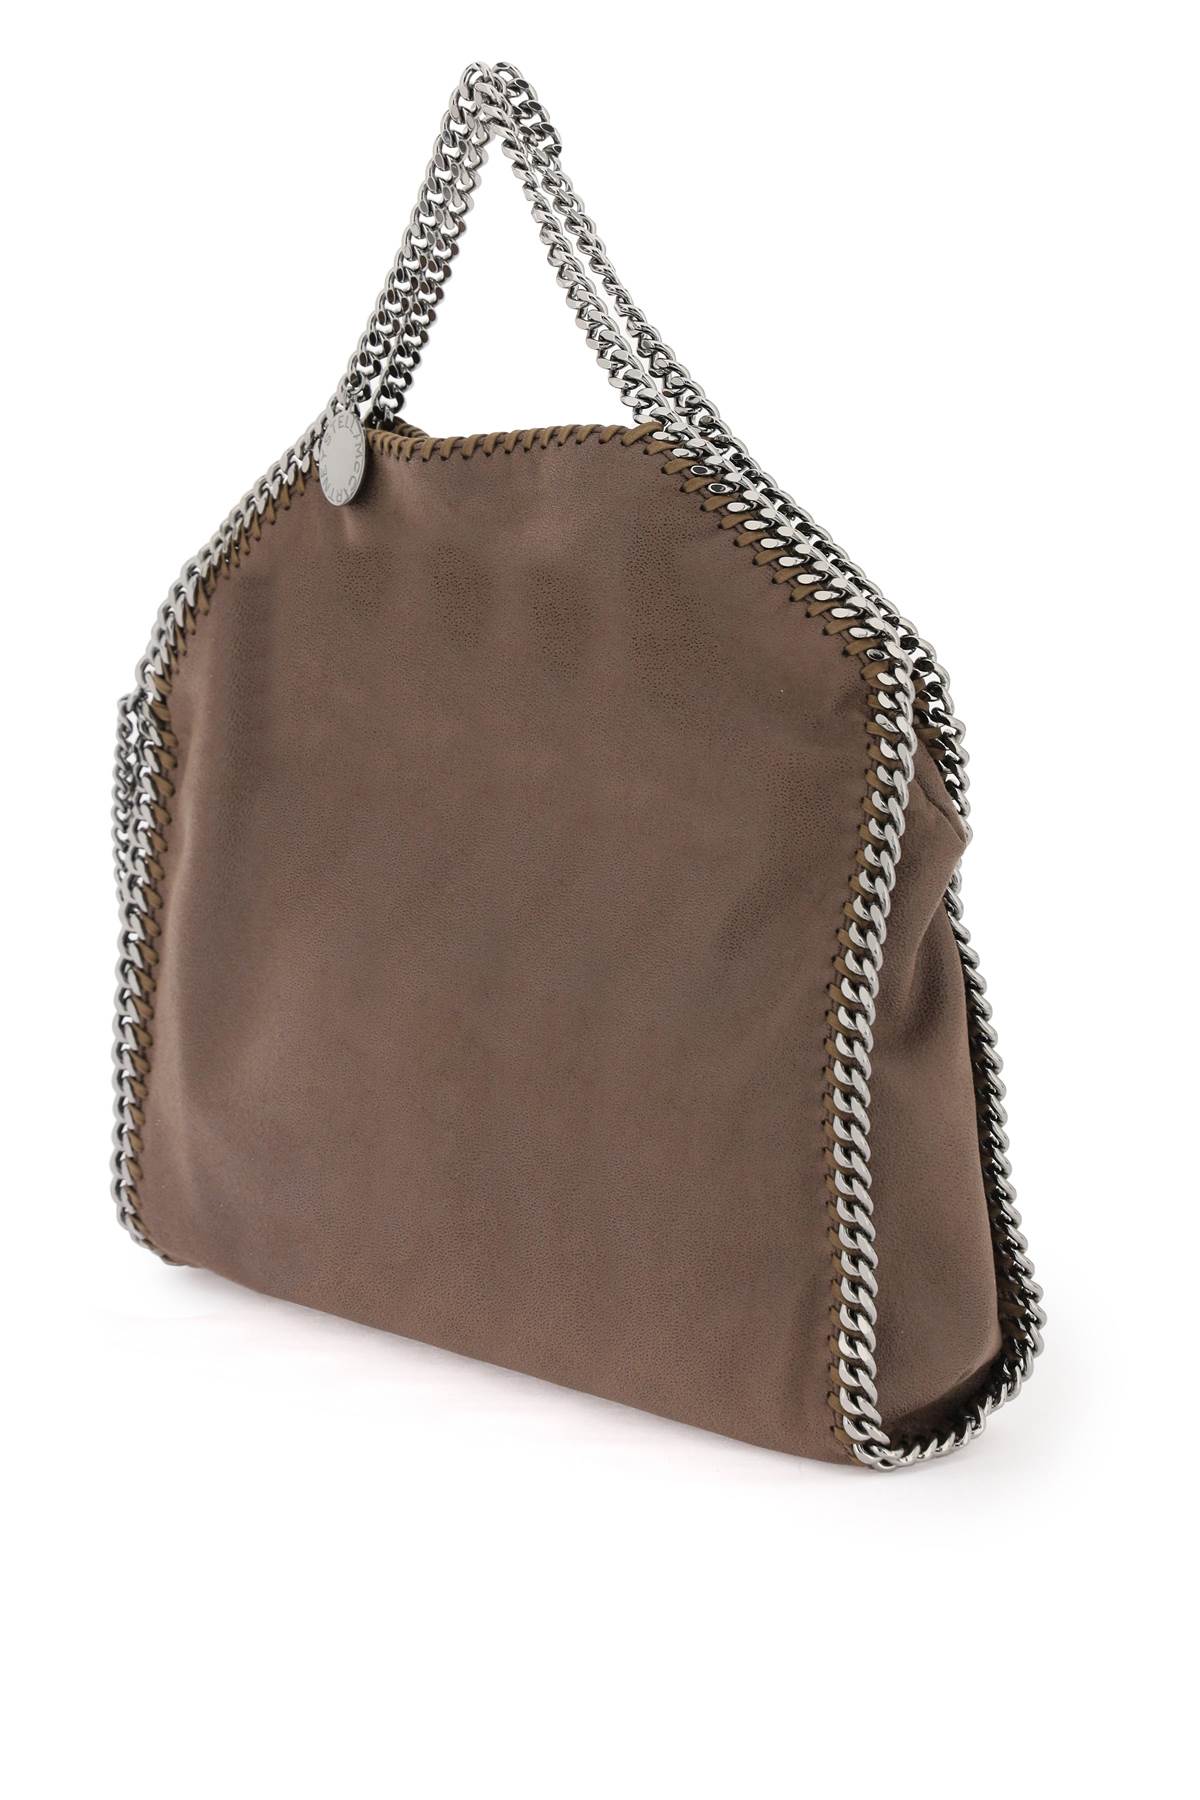 STELLA MCCARTNEY Fashionable Brown Shoulder Handbag for Women